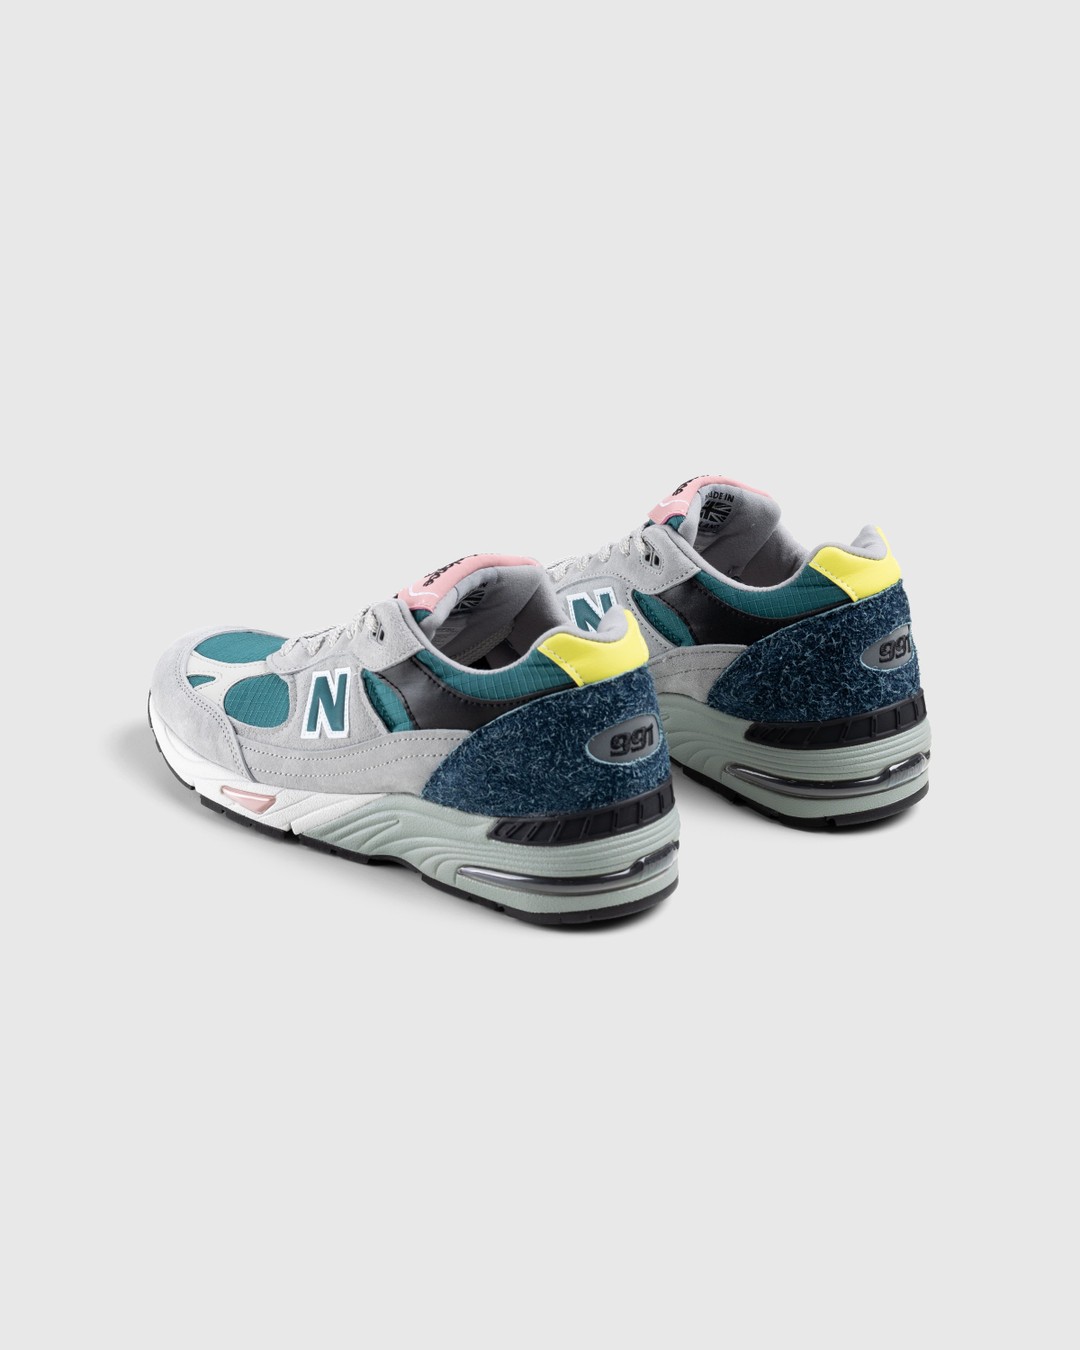 New Balance – M 991 PSG Grey/Teal - Sneakers - Multi - Image 4